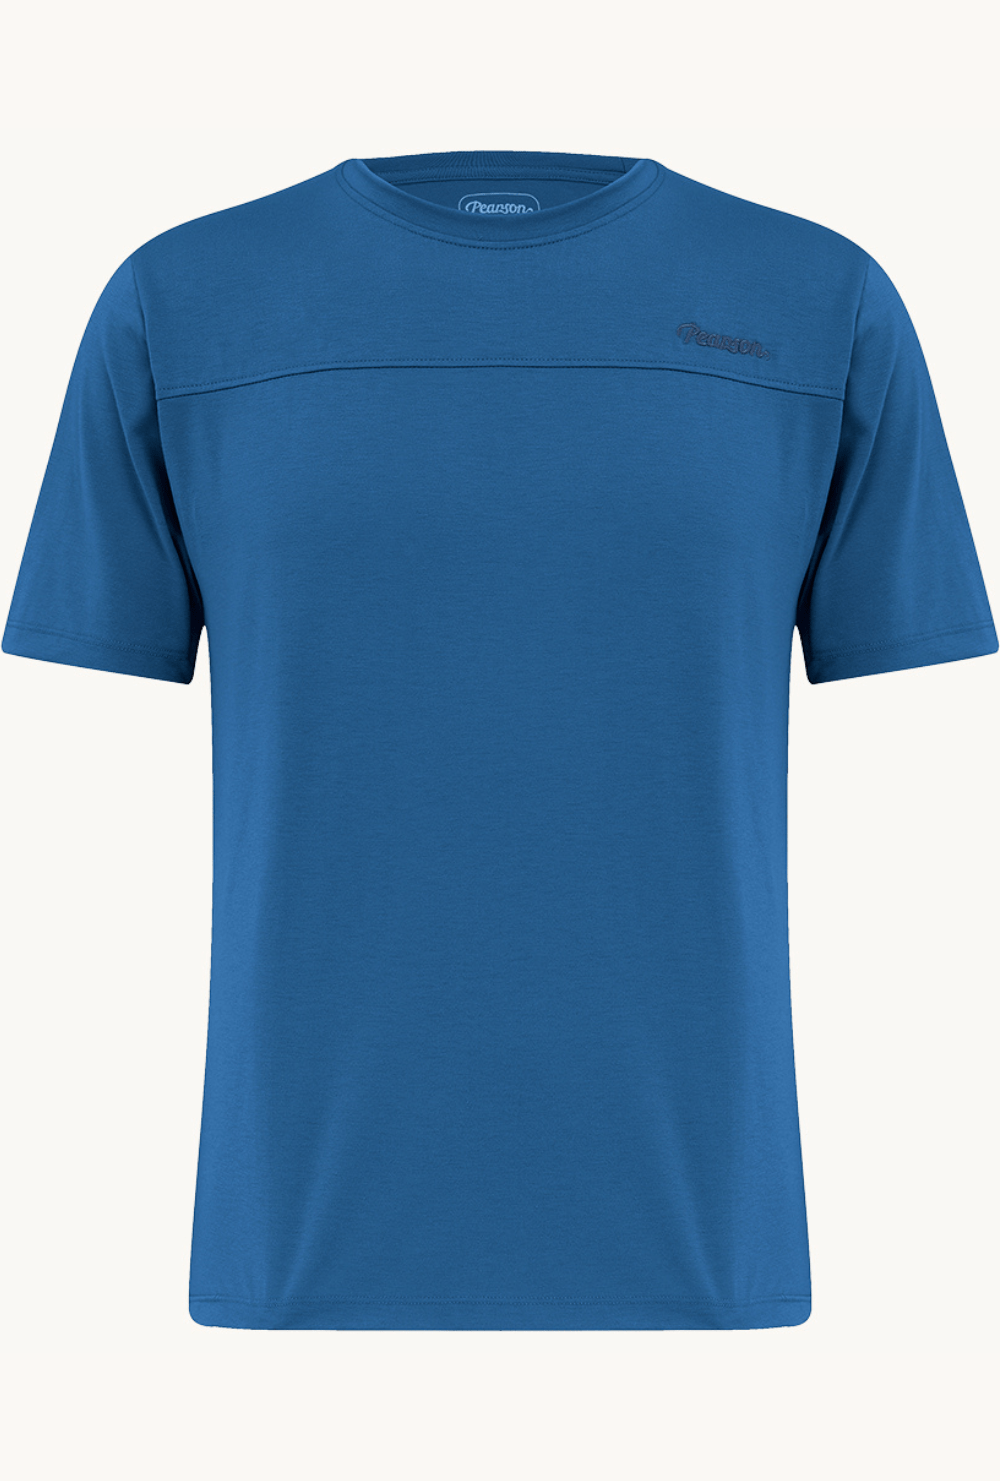 Pearson 1860  High DaysandHolidays - Cycling T-shirt Mid Blue  Mid Blue / Large